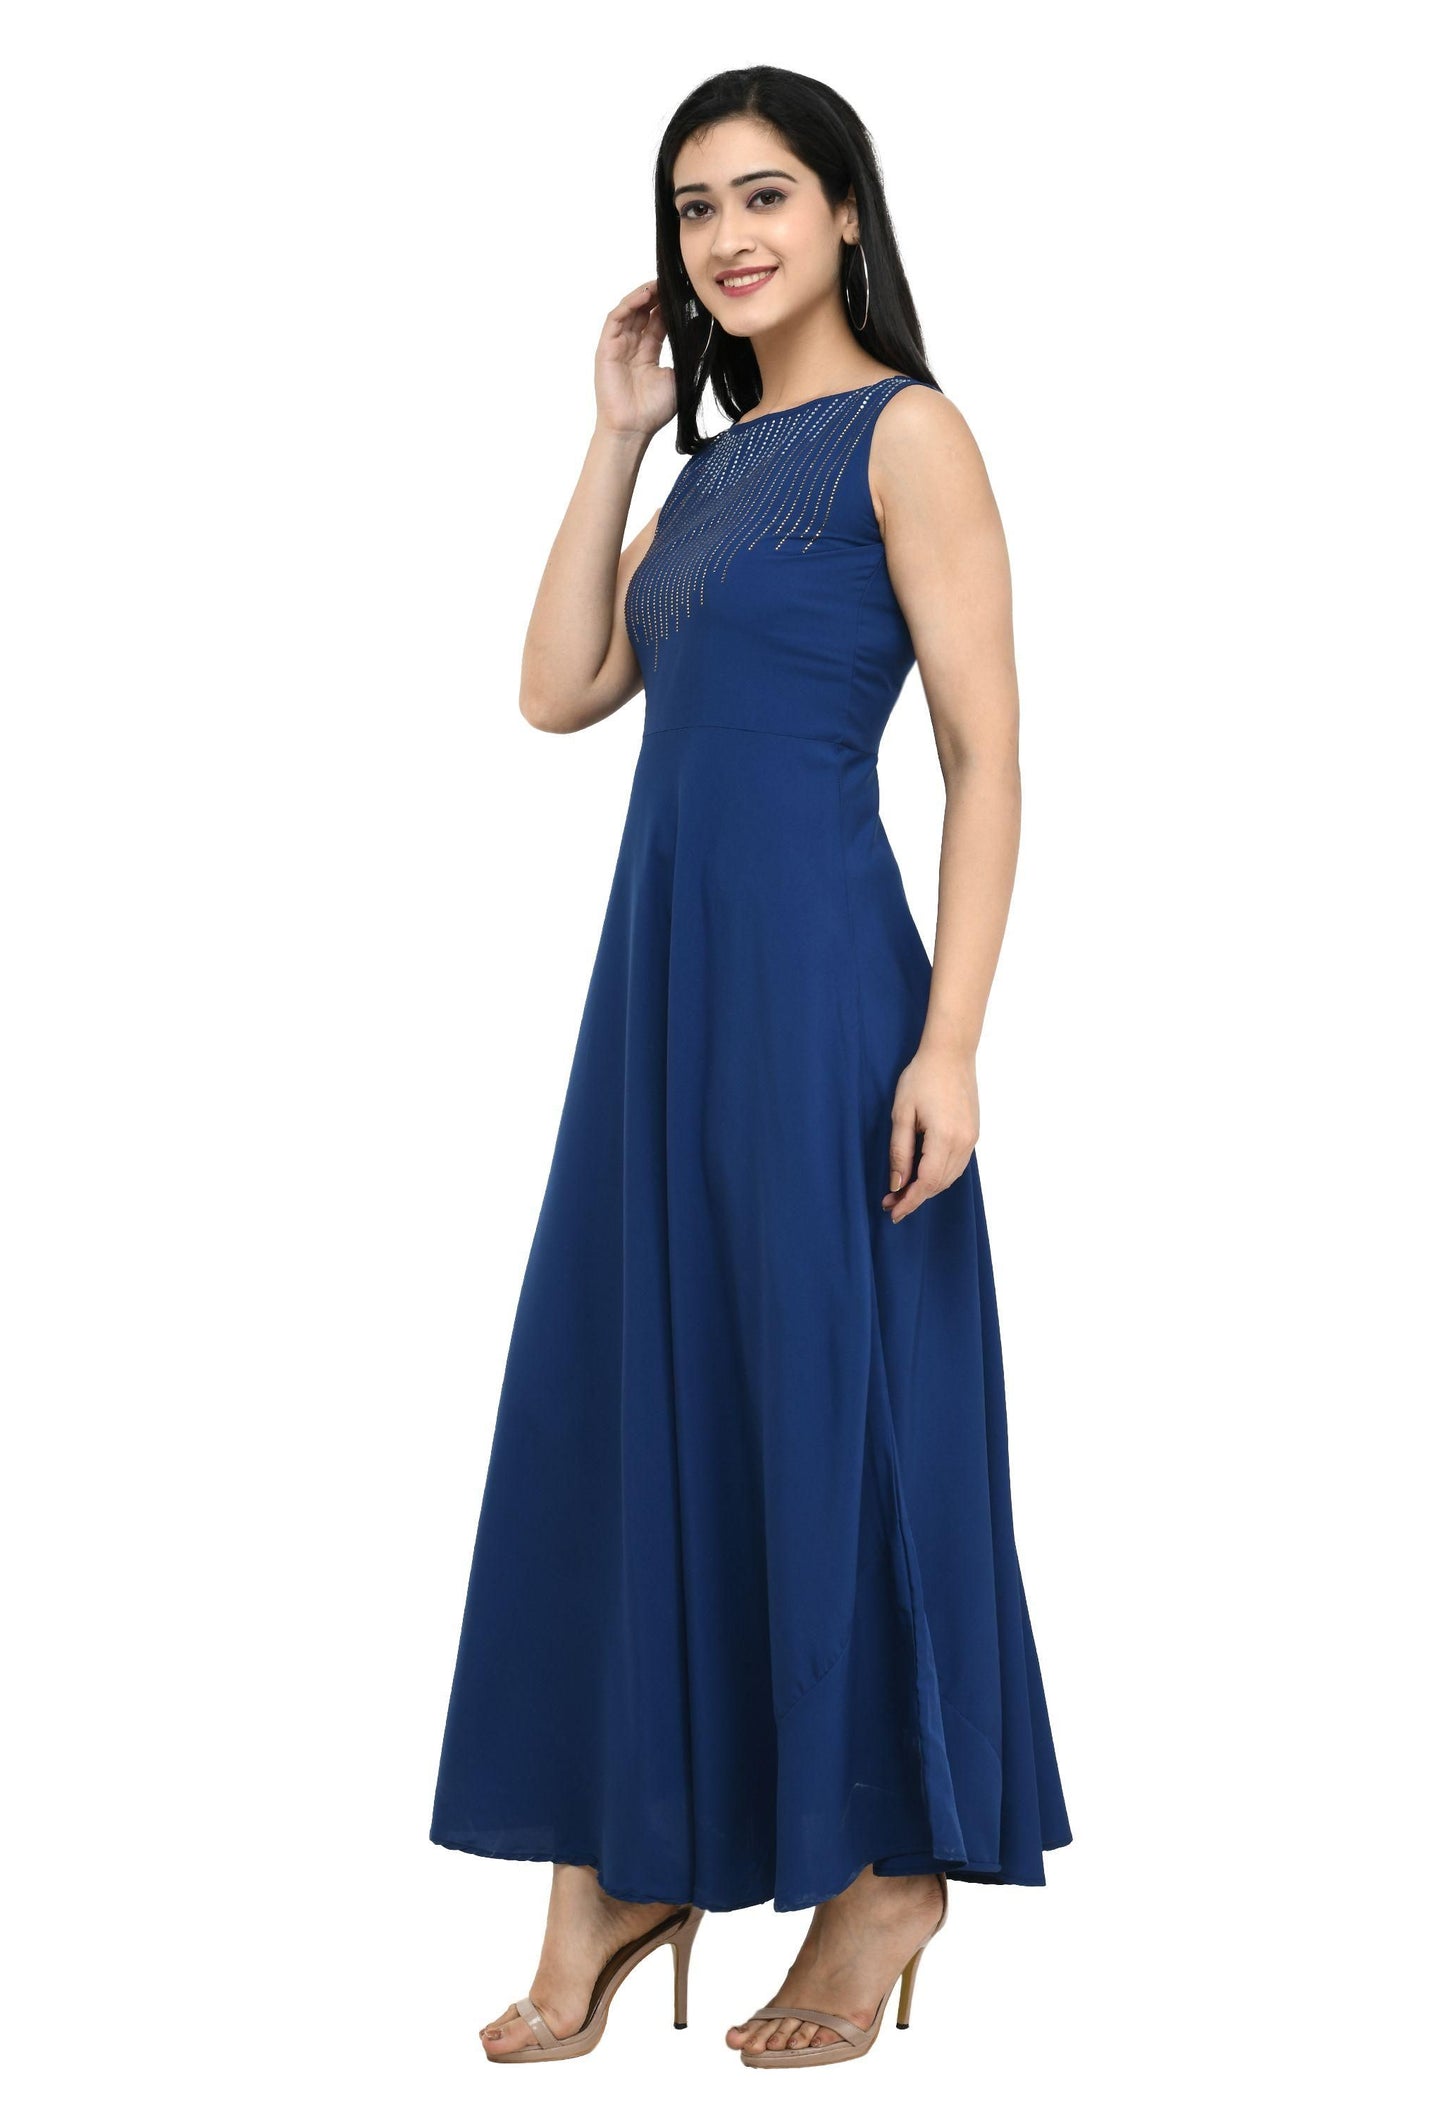 Navy Blue Crepe Embellished Maxi Dress